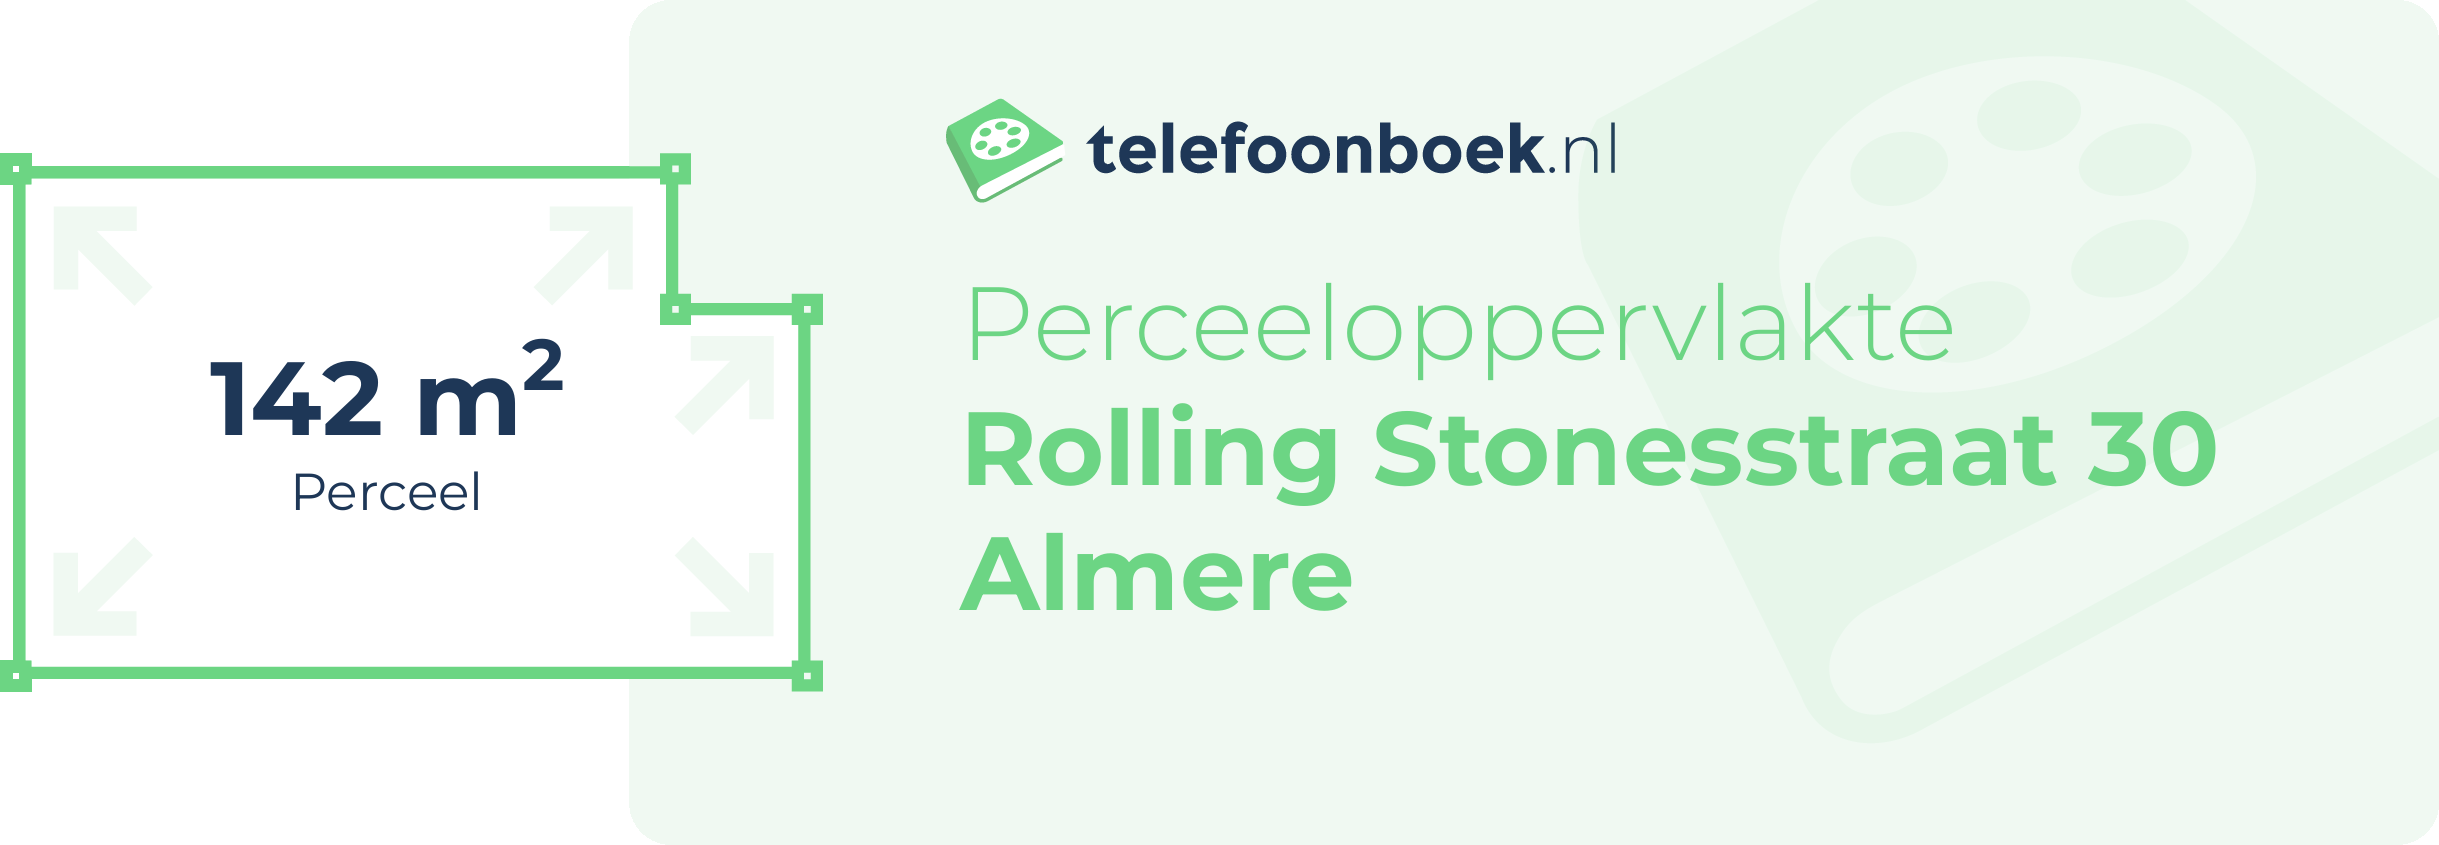 Perceeloppervlakte Rolling Stonesstraat 30 Almere